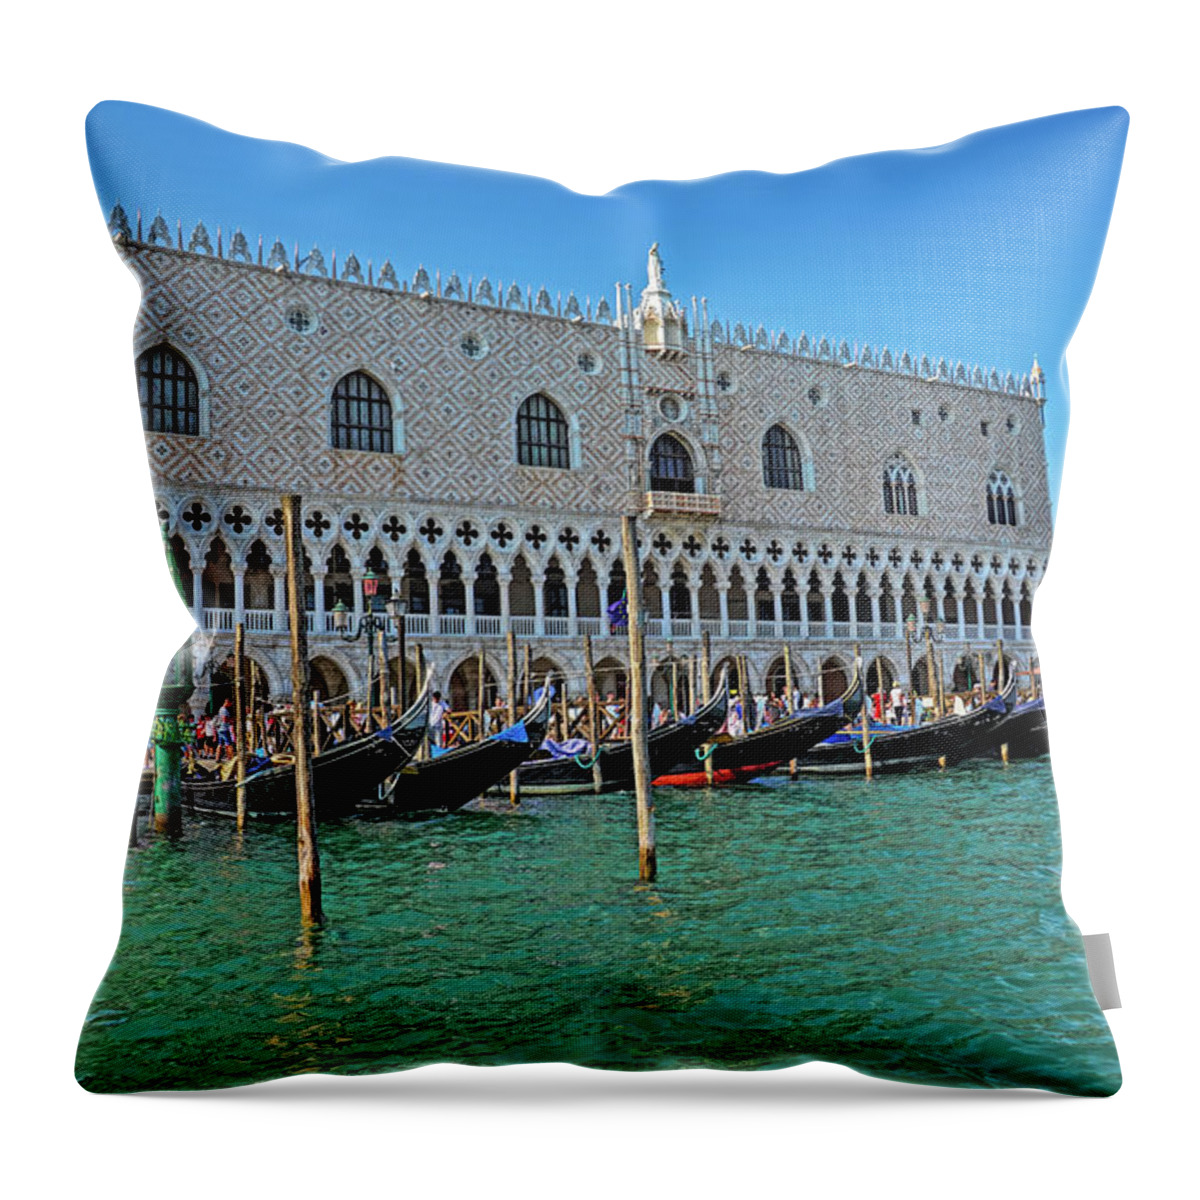 Gondola Throw Pillow featuring the photograph Venice - Gondolas by Yvonne Jasinski